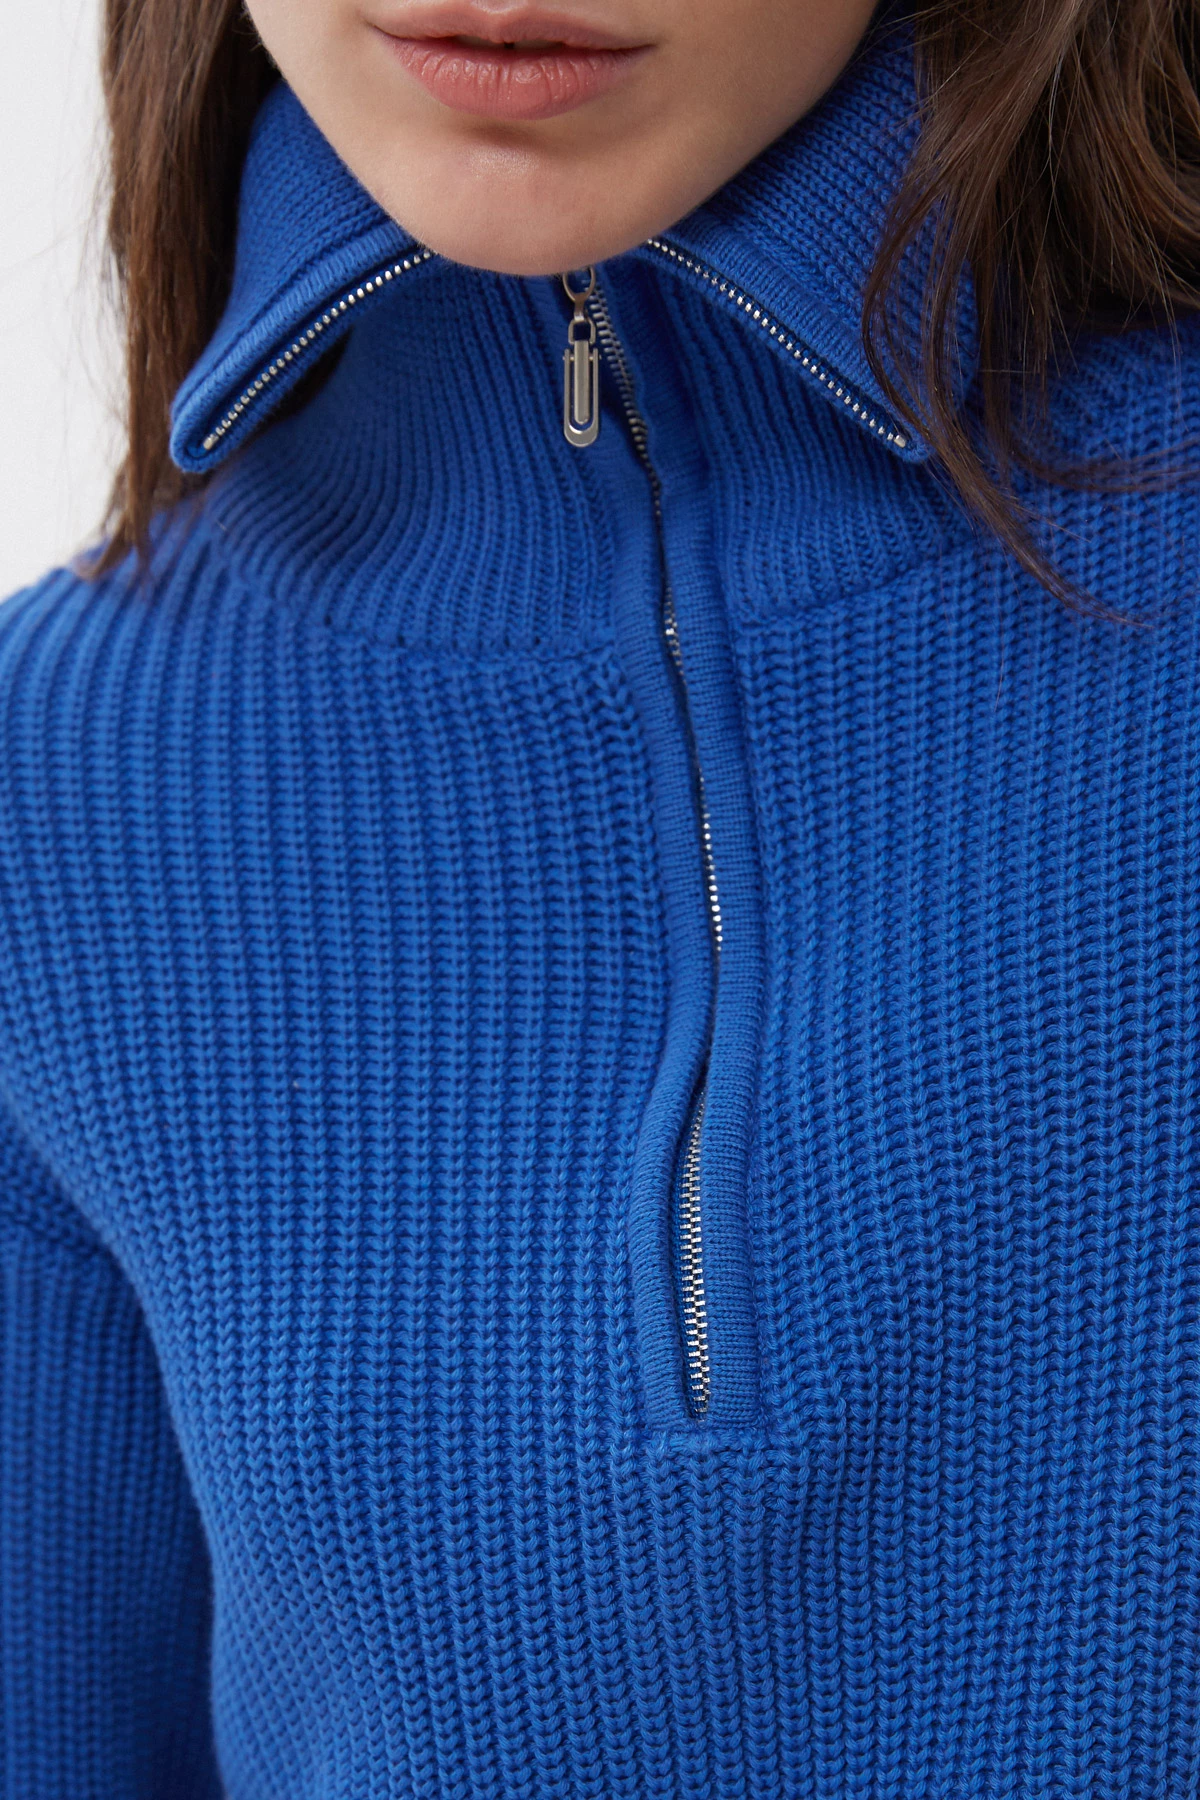 Blue cotton zip-up knit sweater, photo 4